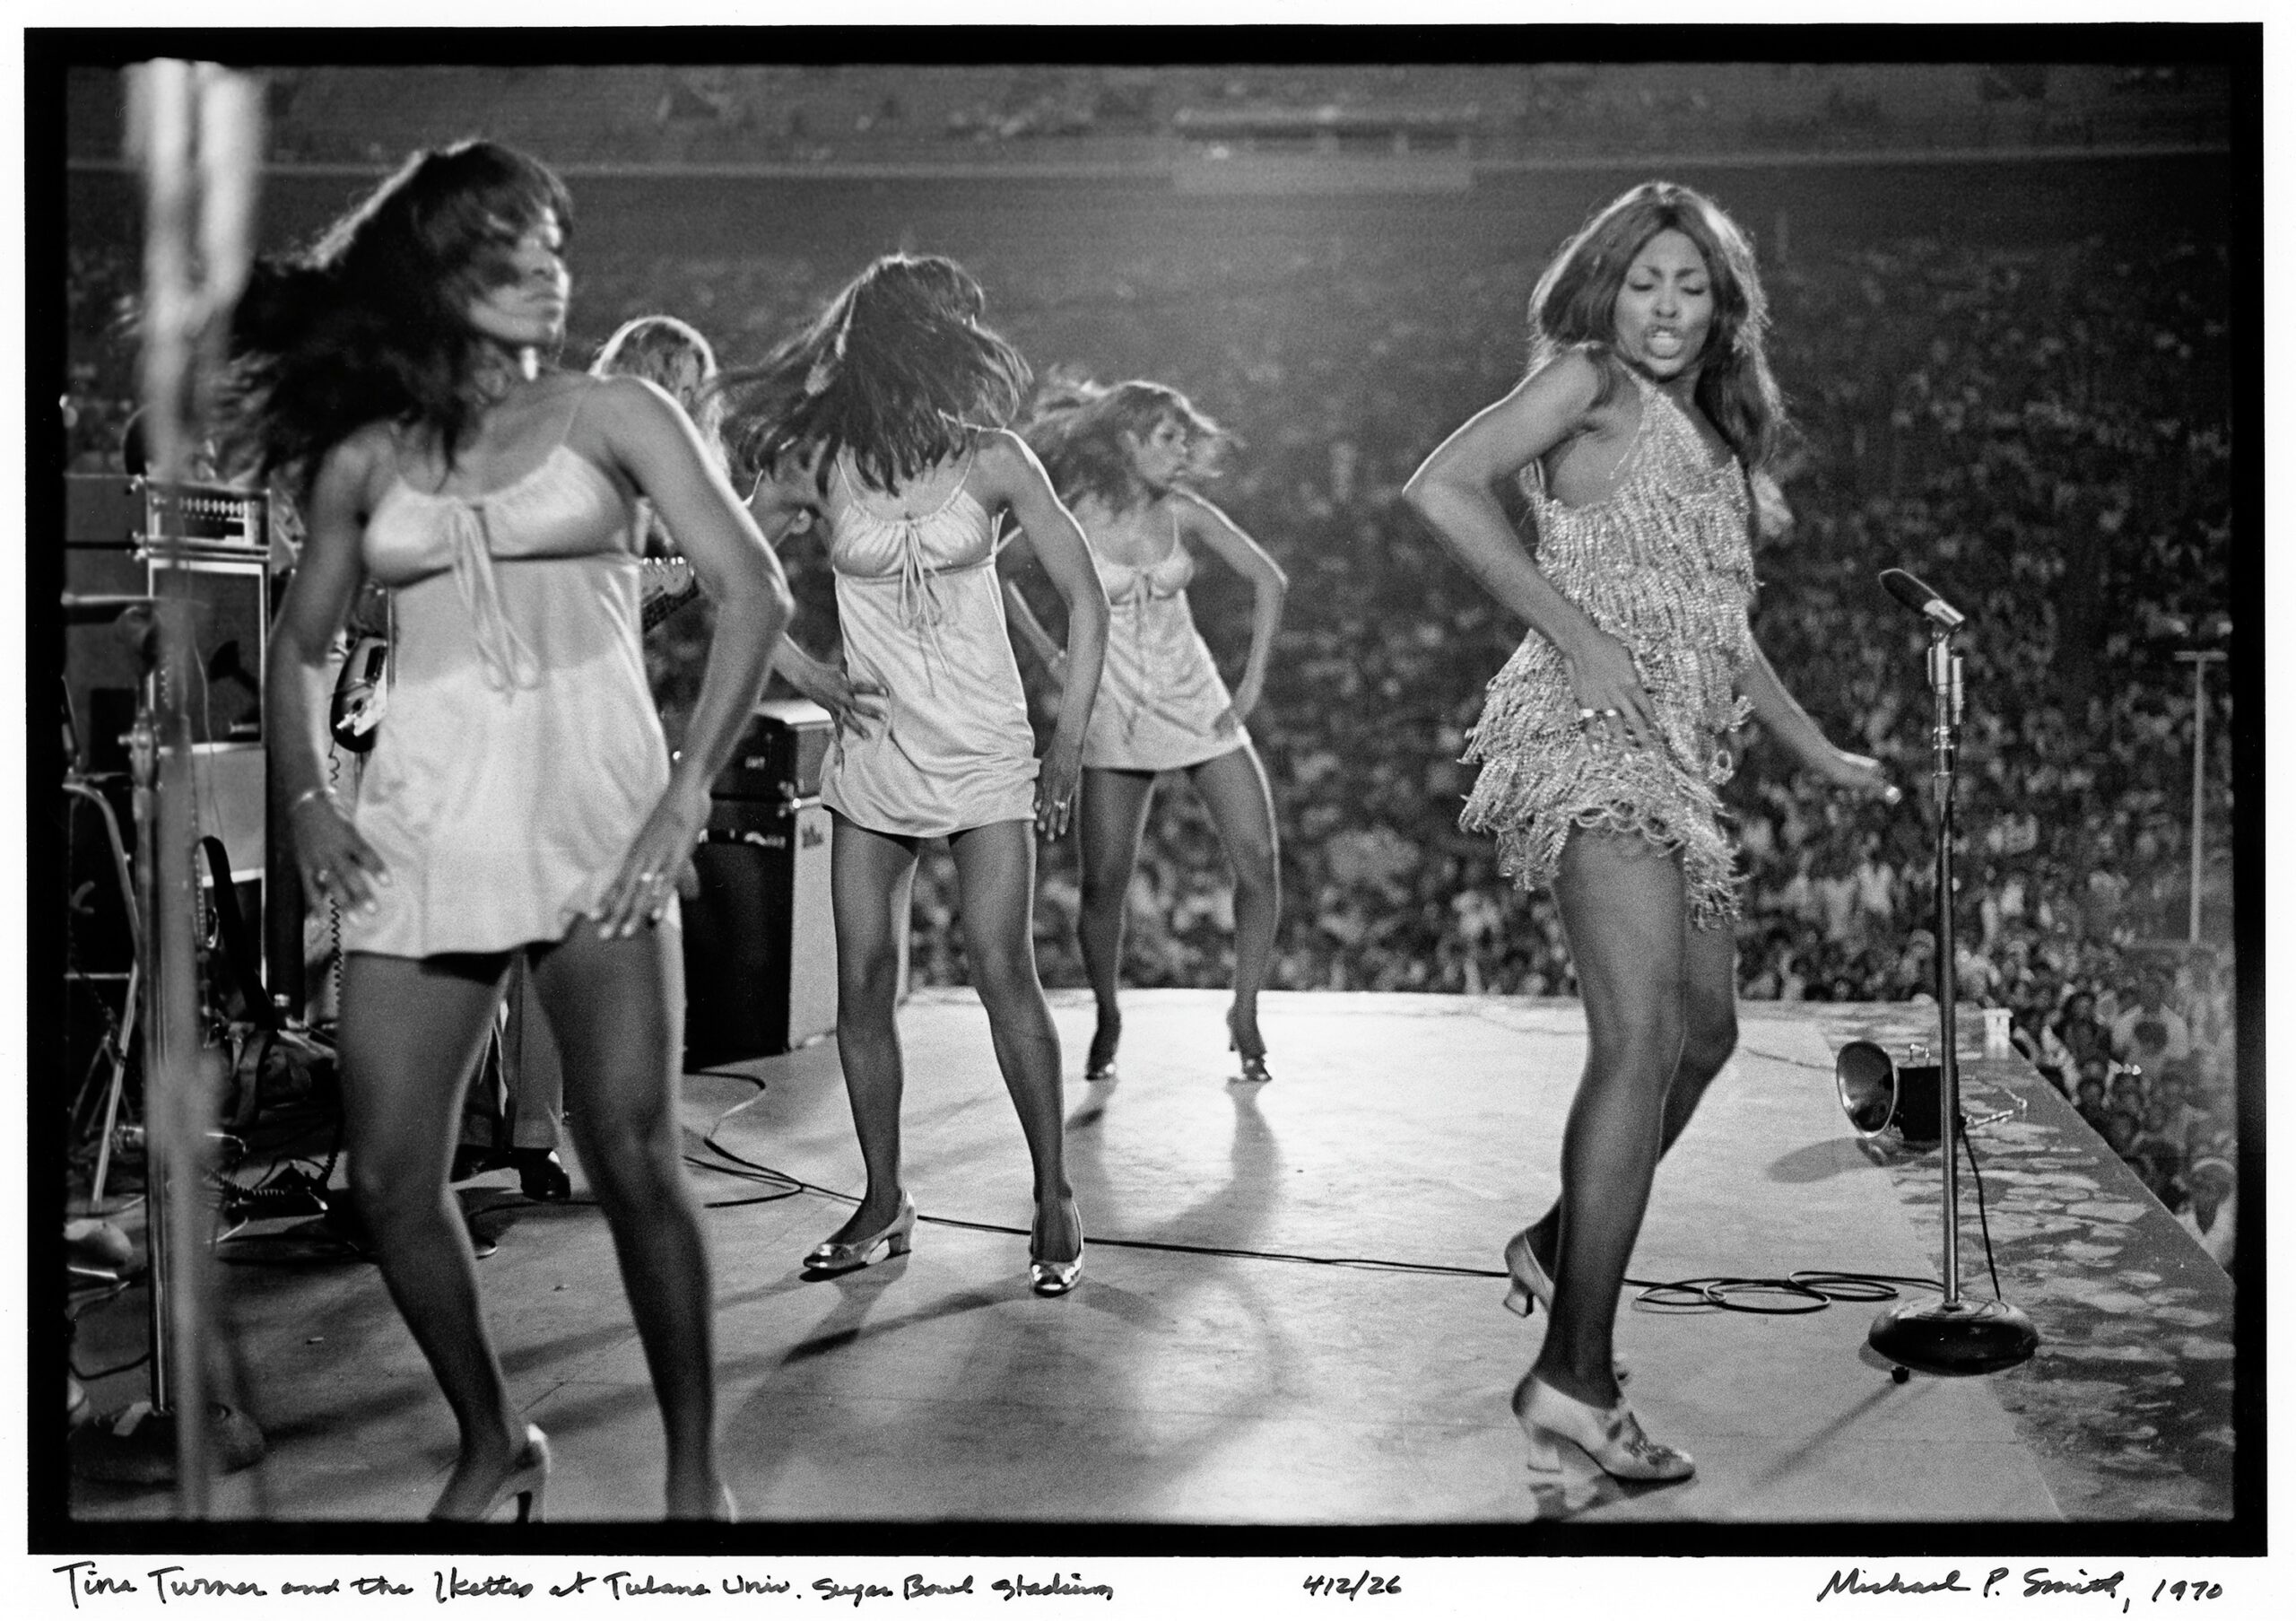 Tina Turner and Ikettes